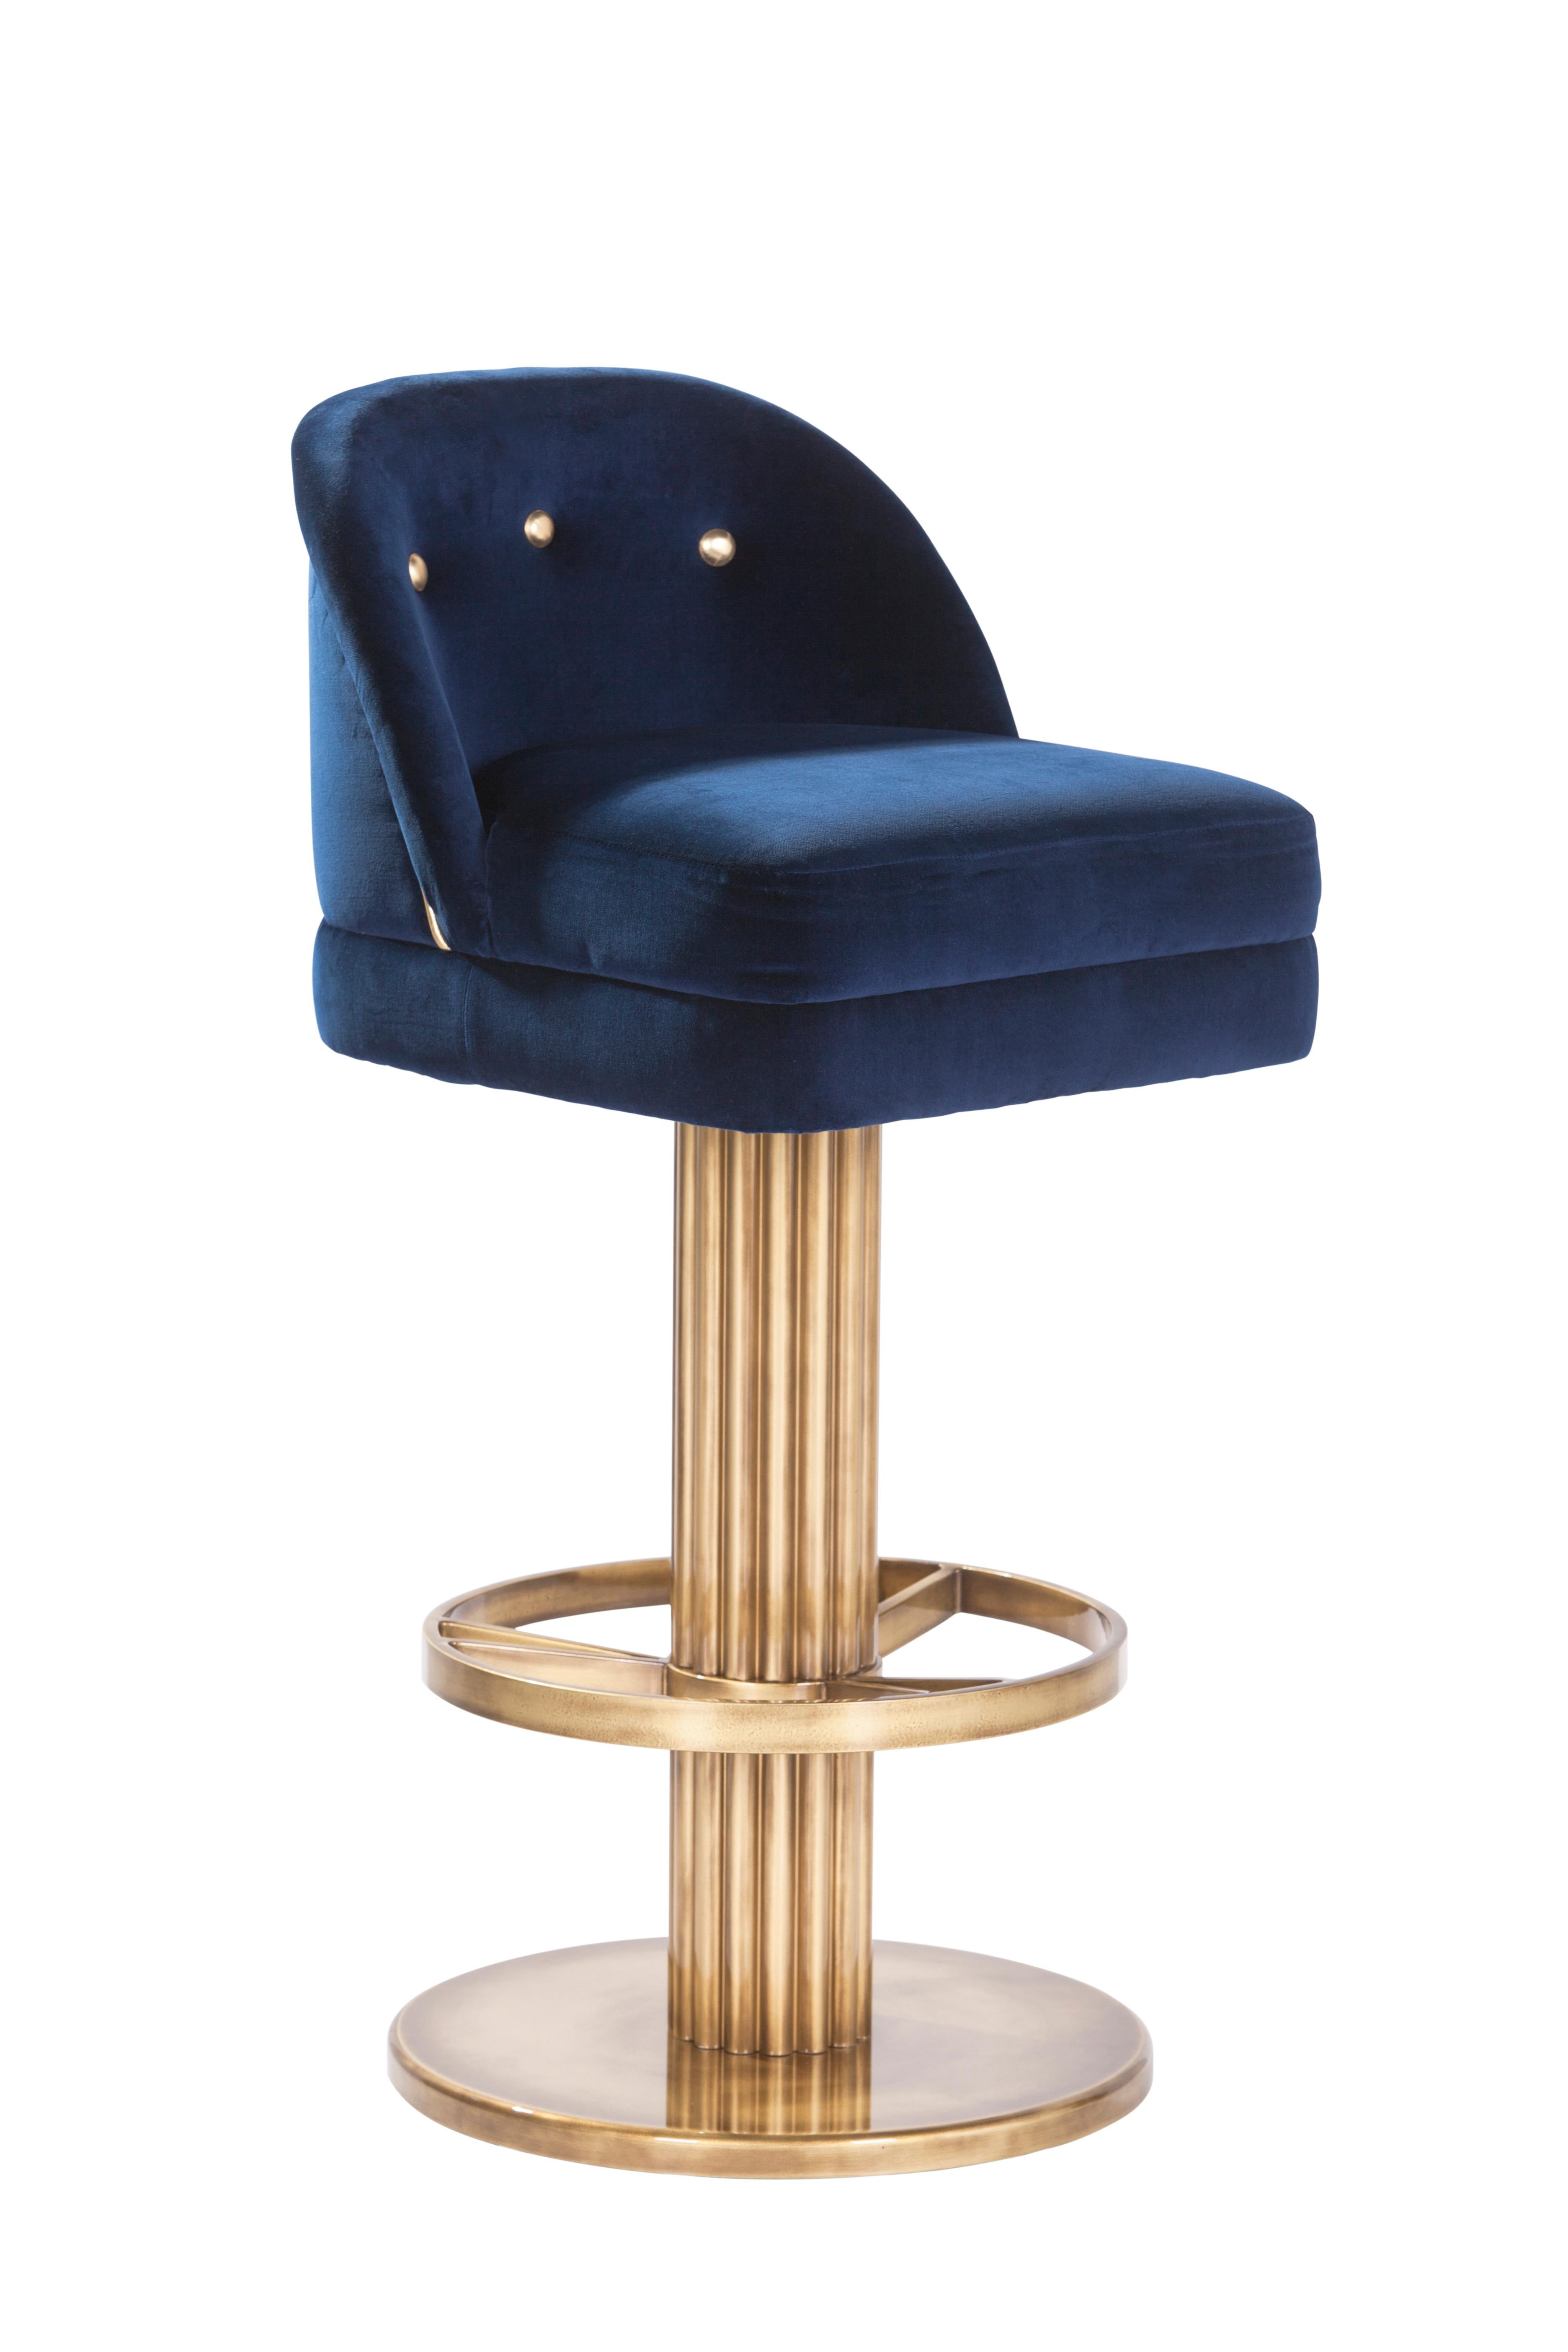 blue and gold bar stools